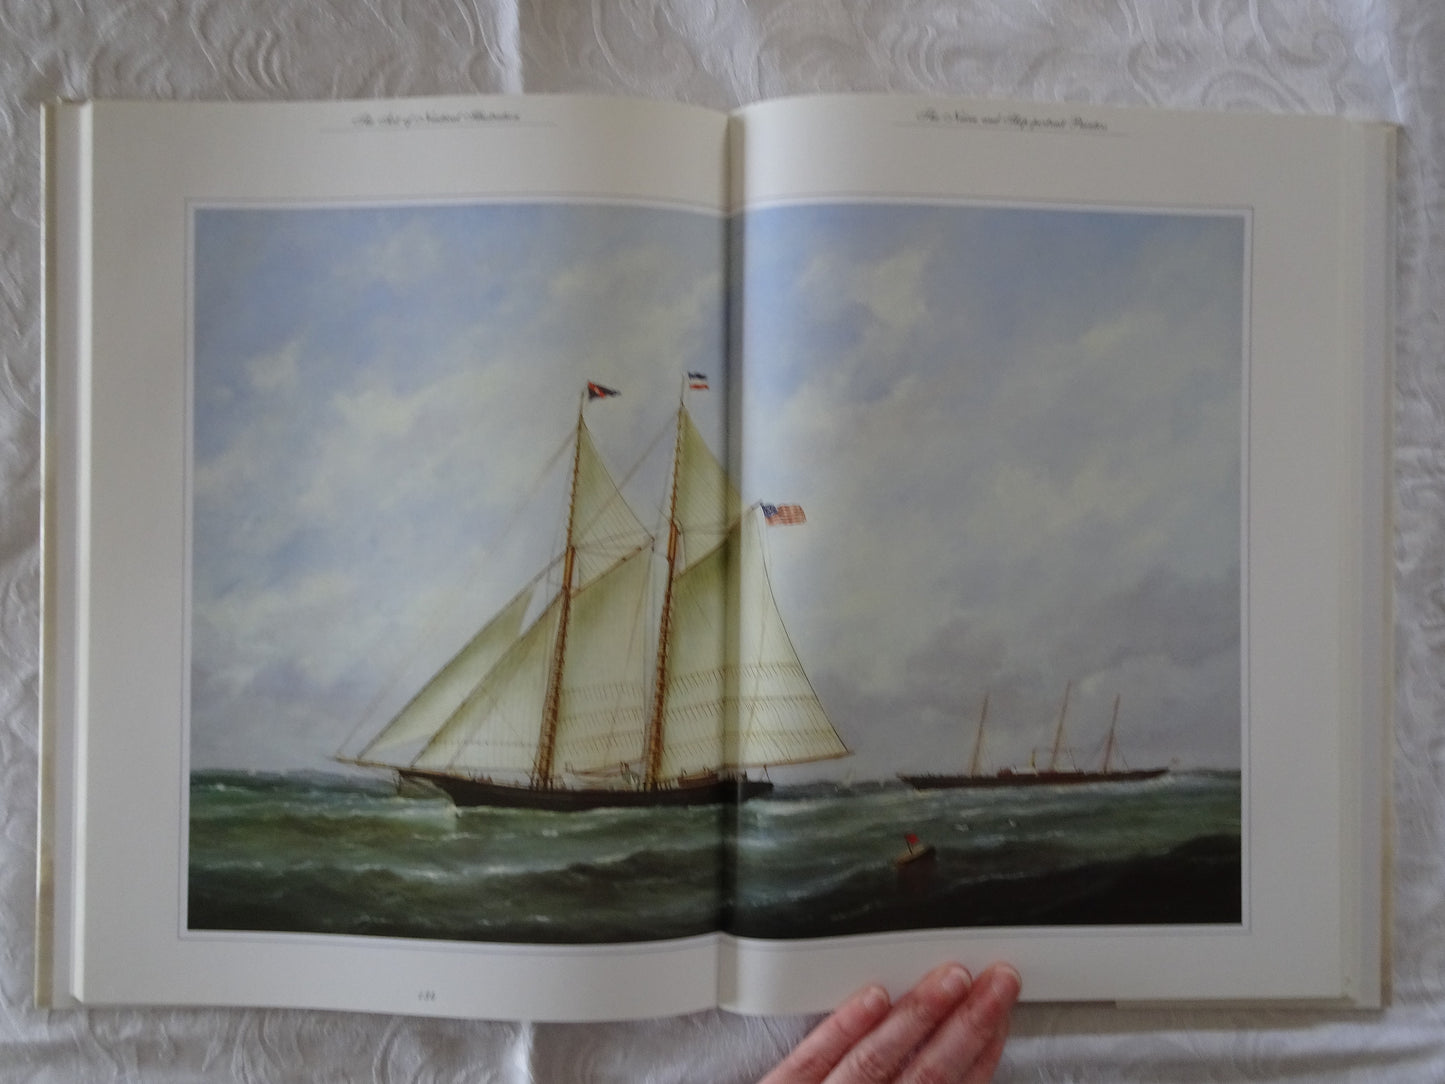 The Art of Nautical Illustration by Michael E. Leek